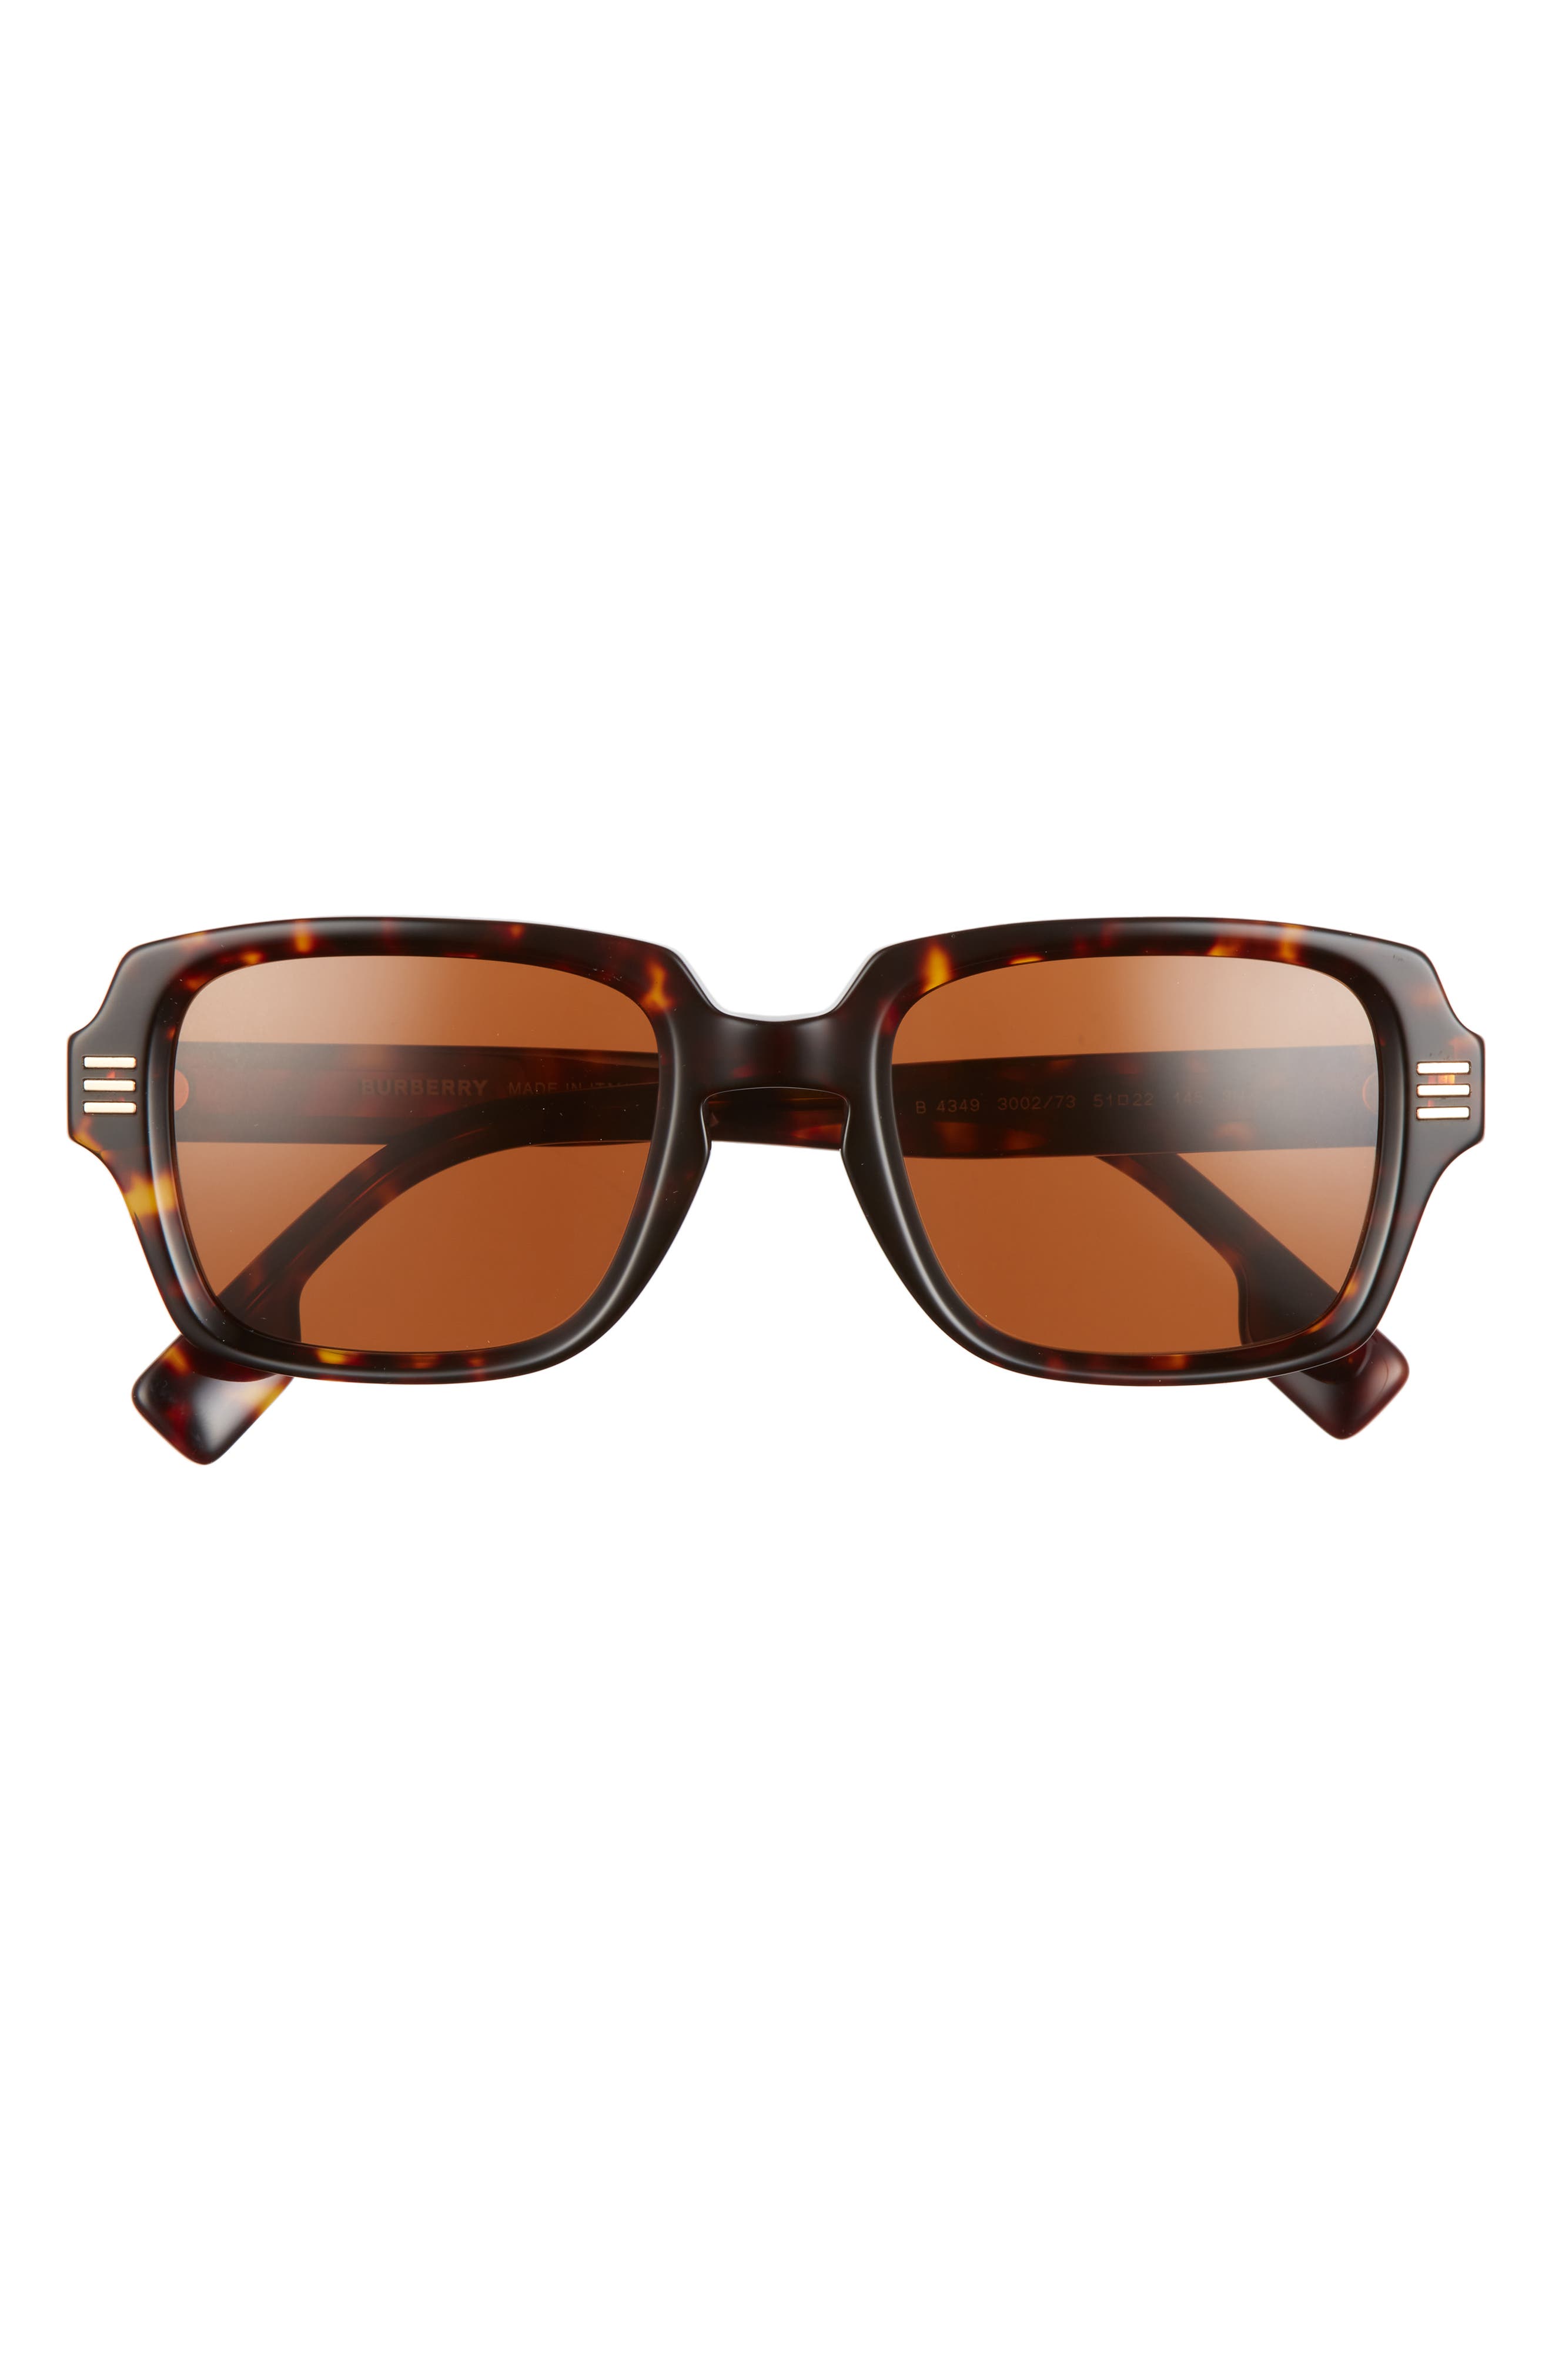 Burberry 51mm Rectangular Sunglasses in Dark Havana/Dark Brown at Nordstrom